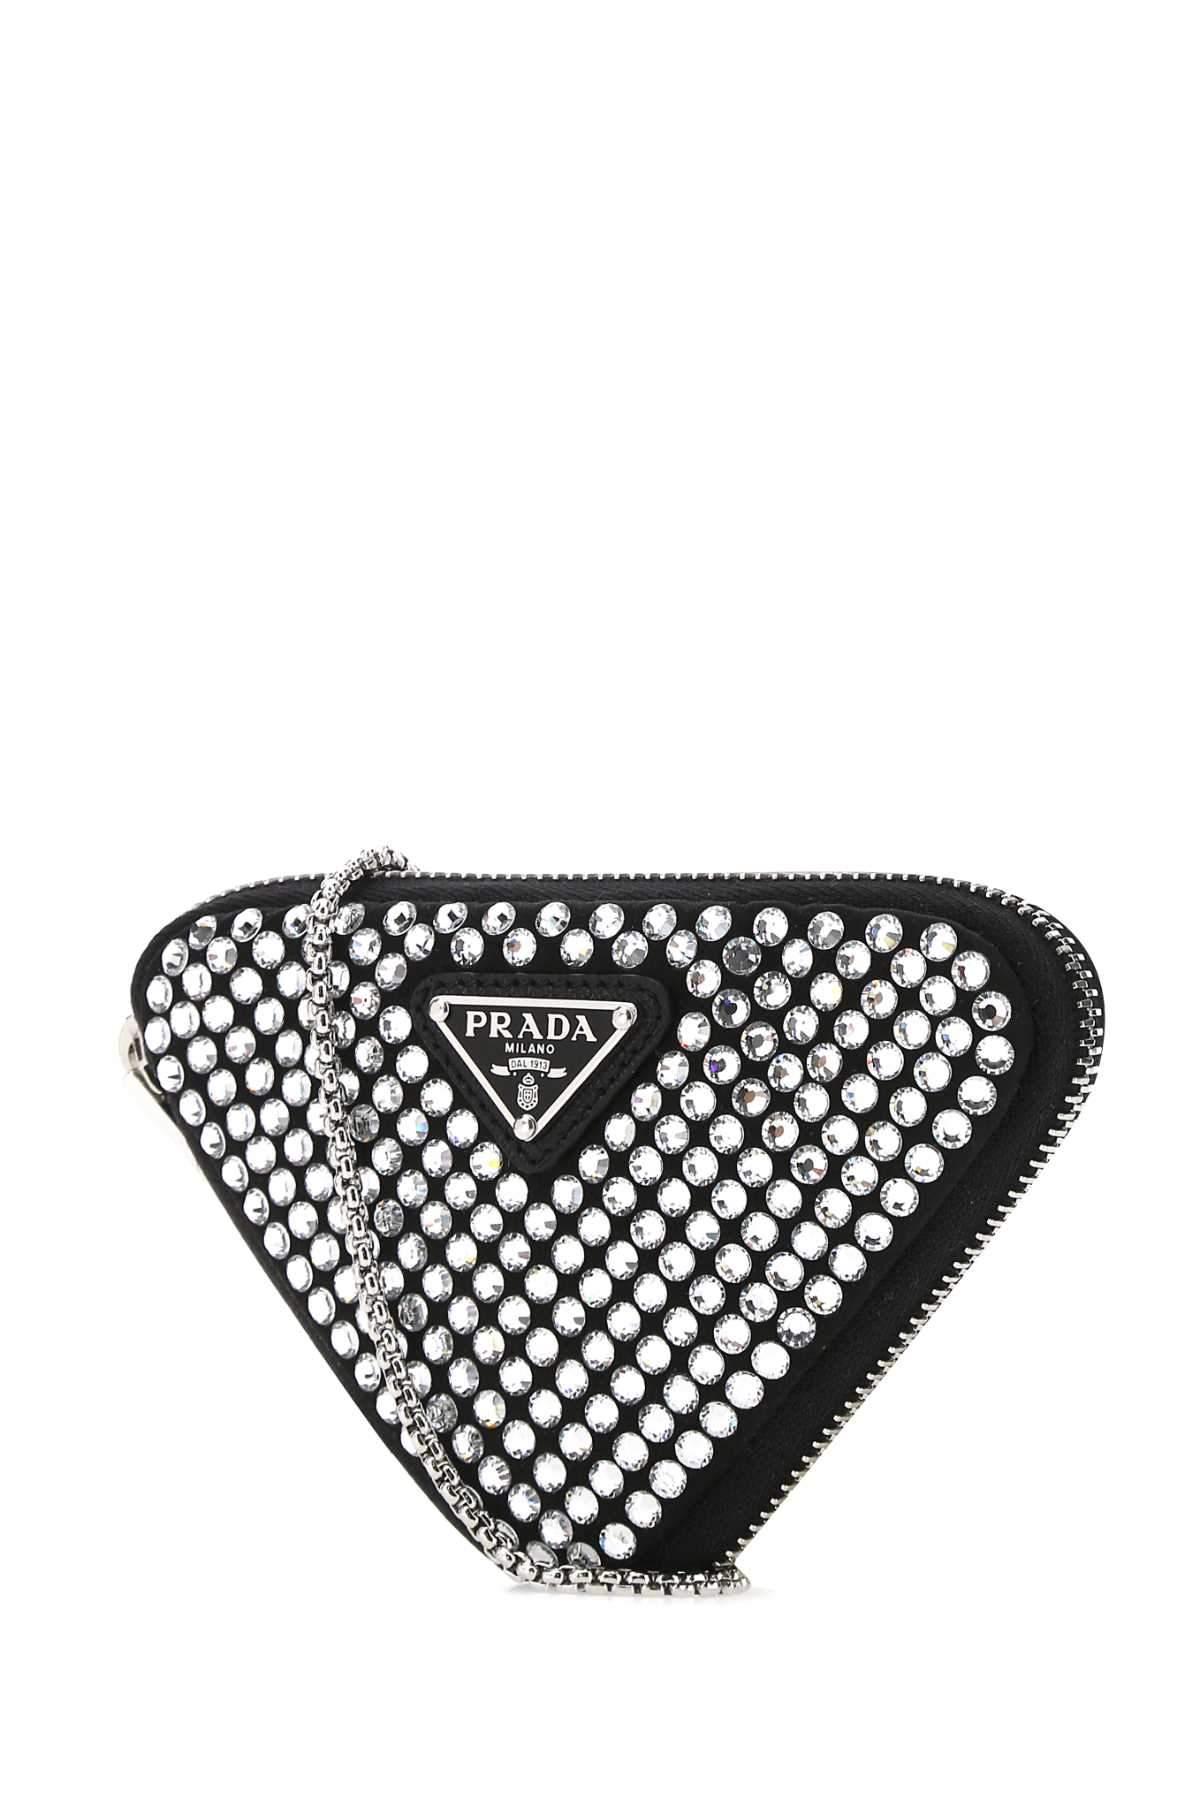 Prada Crystal Embellished Triangle Crossbody Bag in Metallic